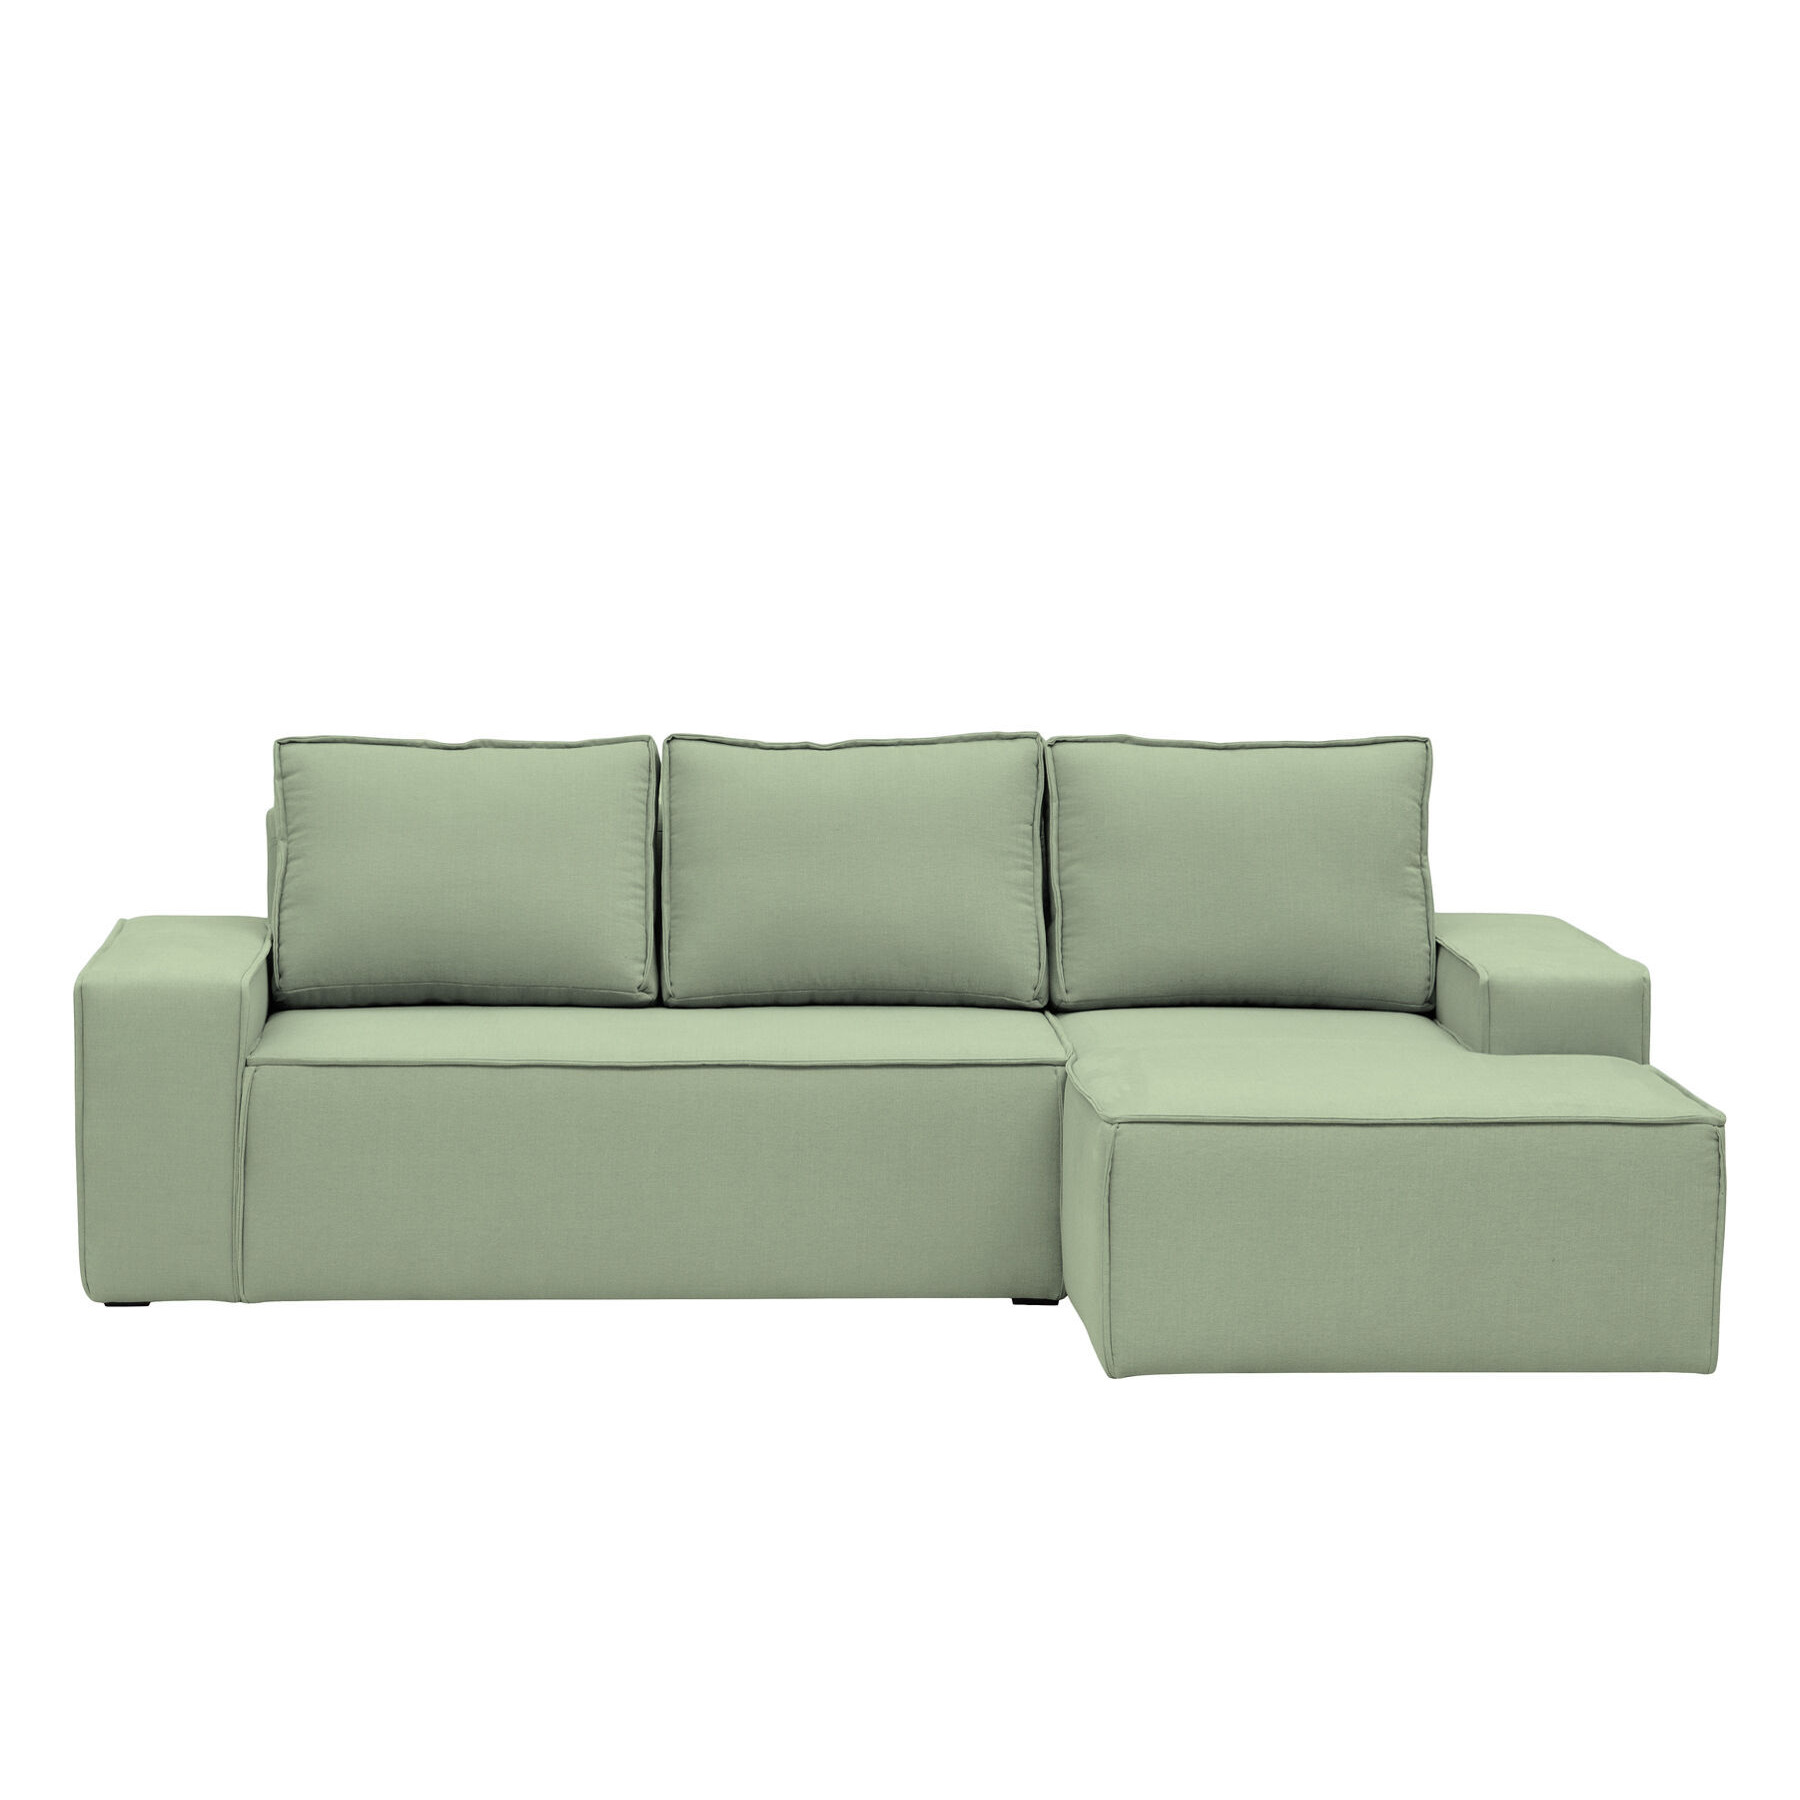 Hoxton Linen Corner Sofa-Bed - Right Hand, Sage